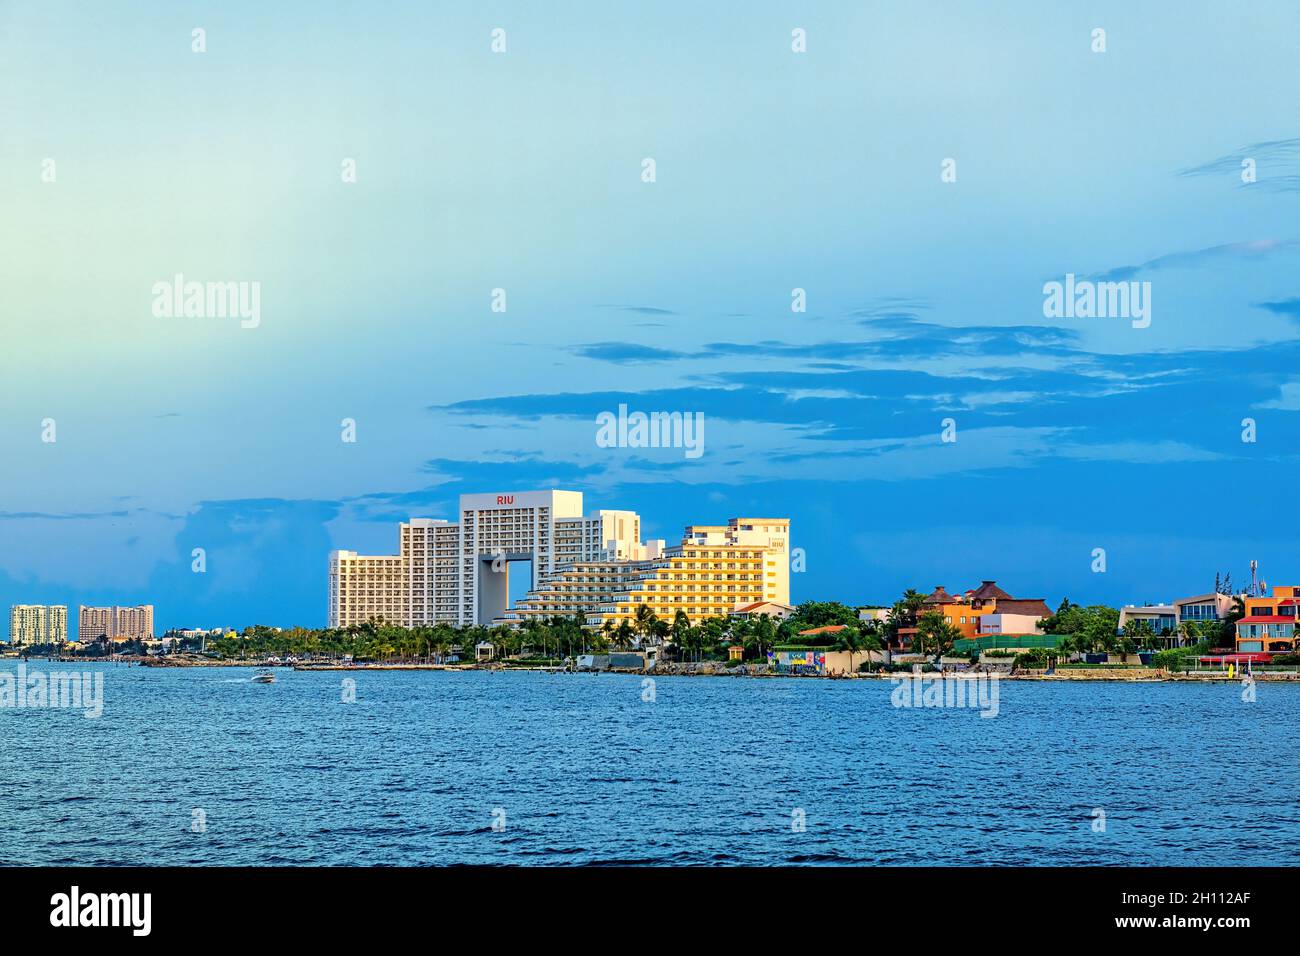 Riu hotel or resort in the Cancun beach, Mexico Stock Photo